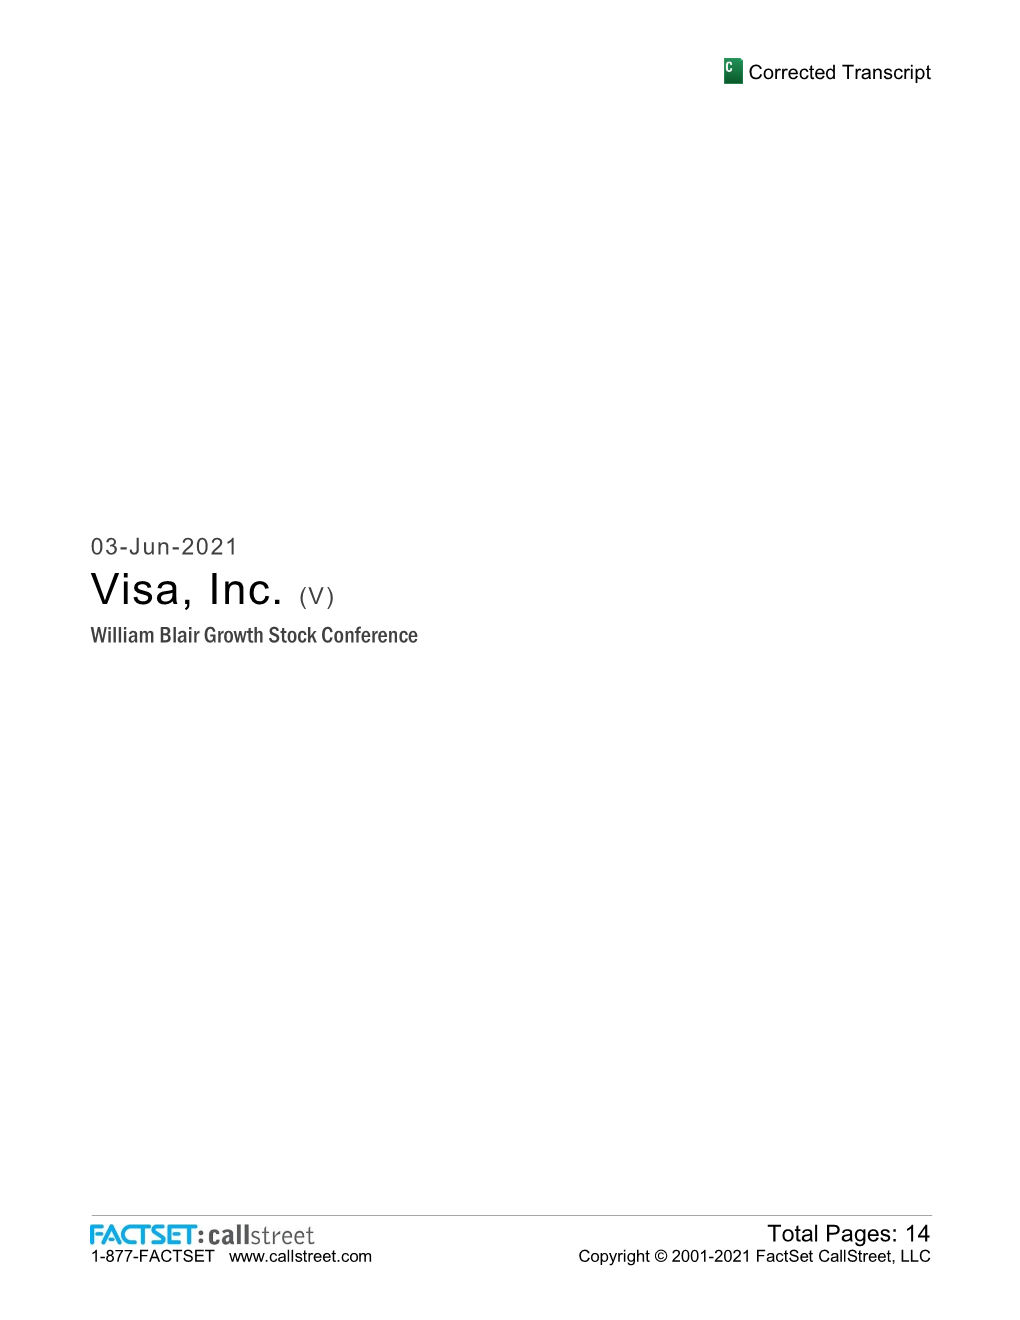 Visa, Inc. (V) William Blair Growth Stock Conference